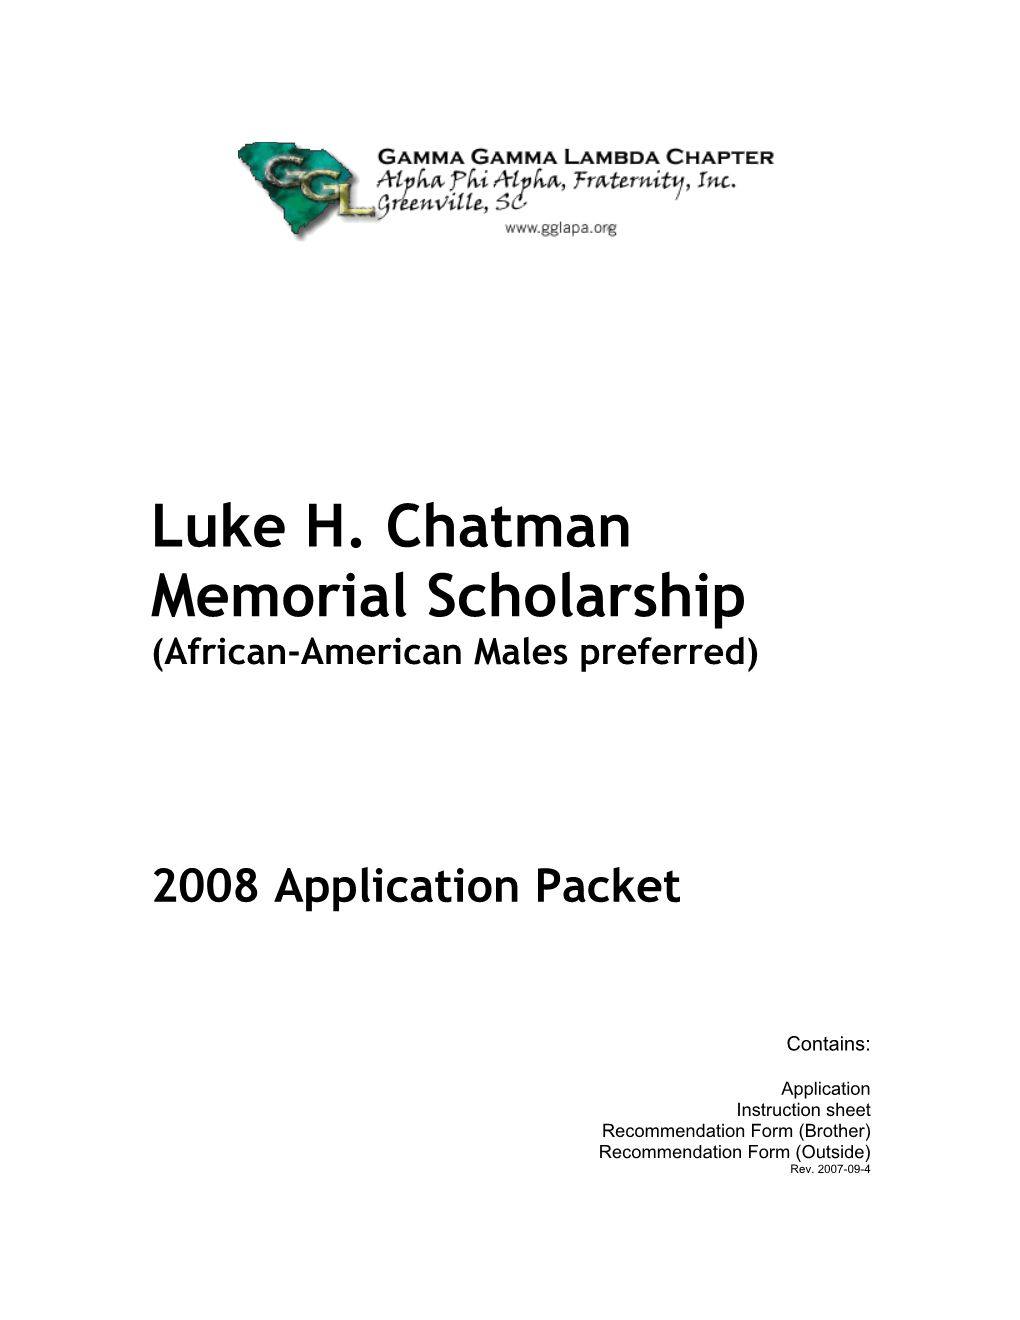 LHC Scholarship Application